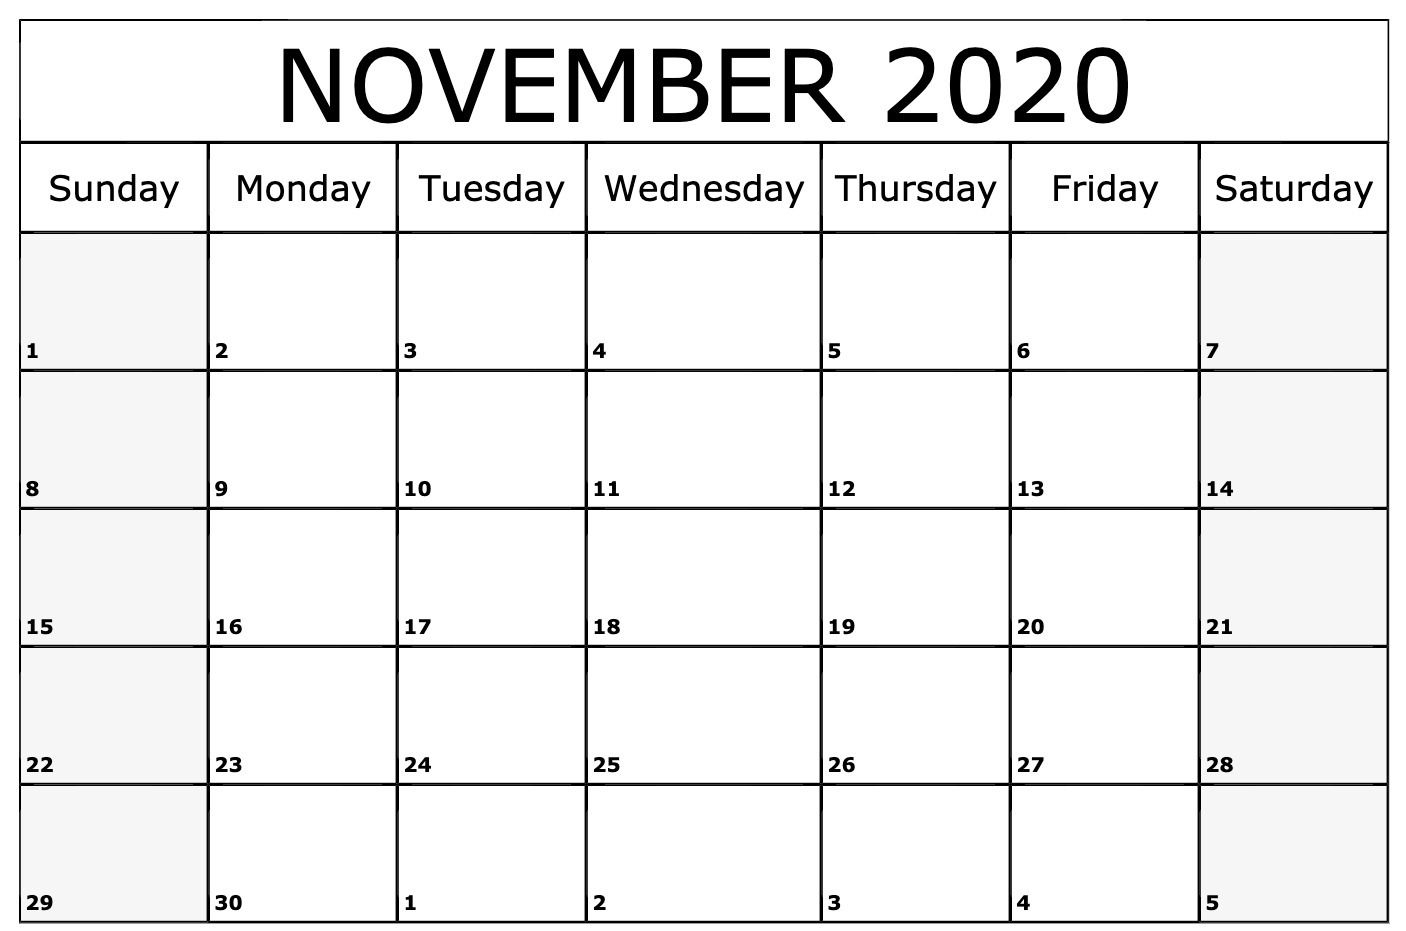 Calendar Template Dec 2020 - Wpa.wpart.co